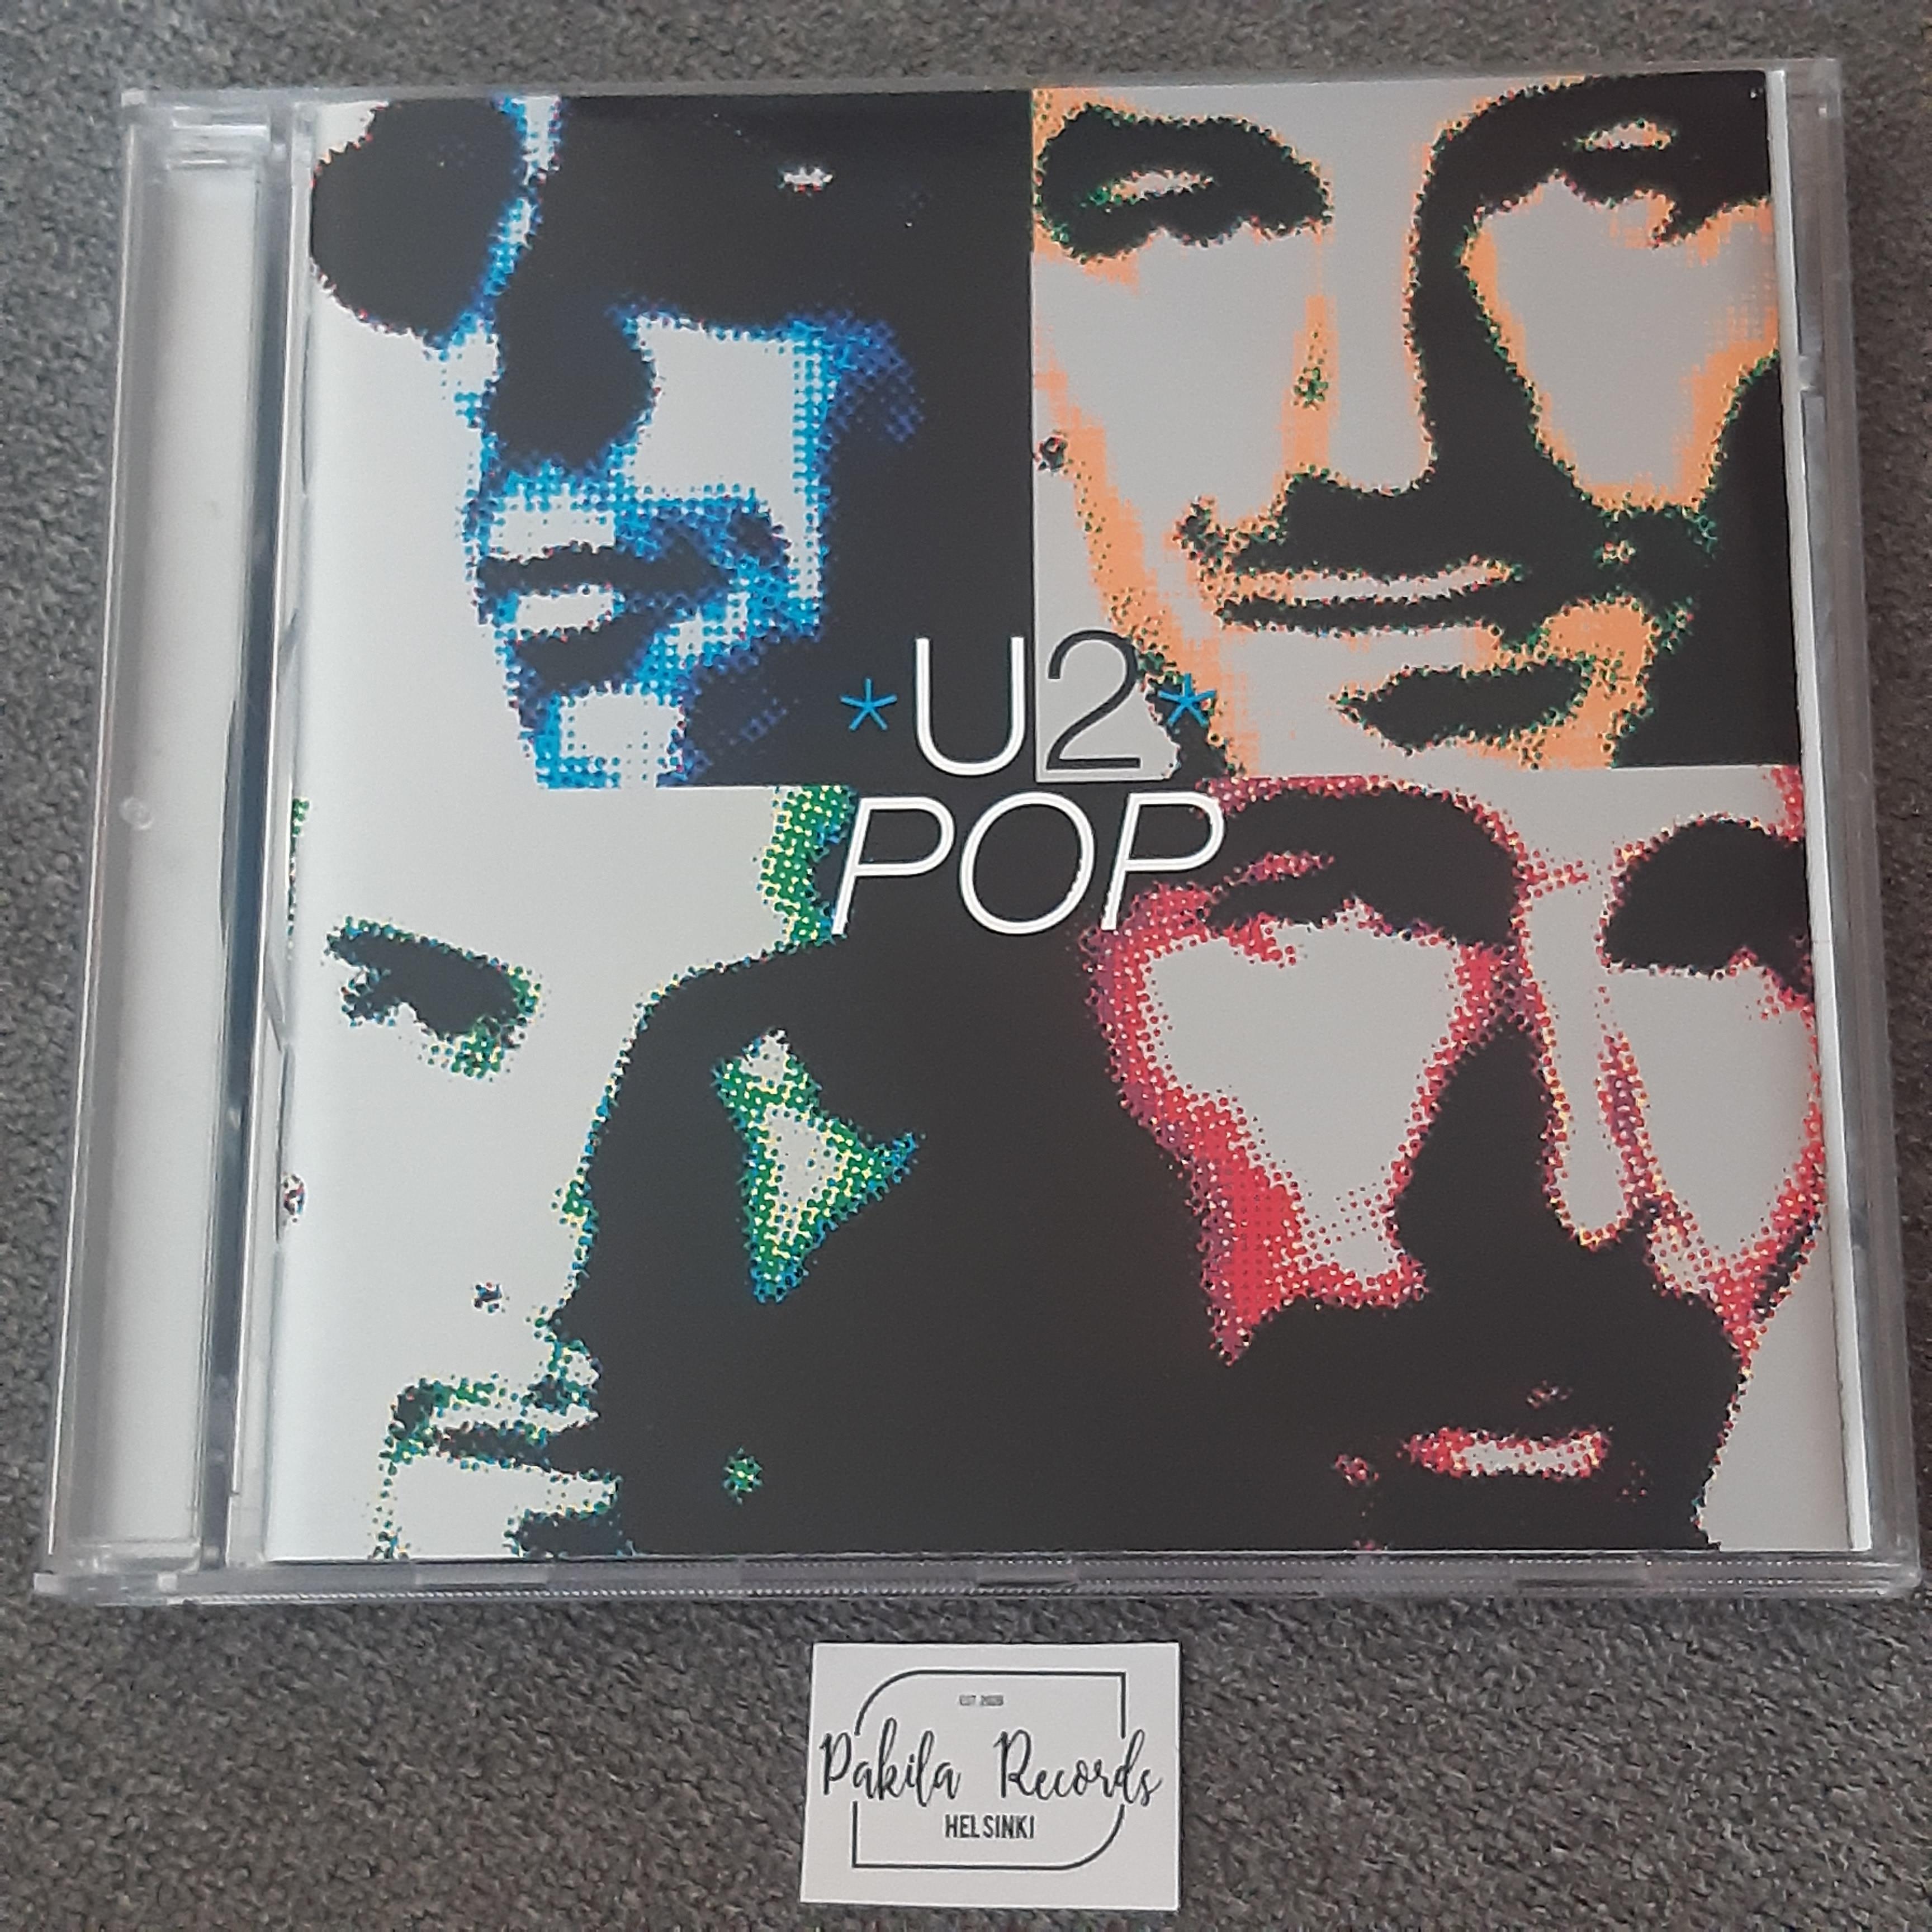 U2 - Pop - CD (käytetty)